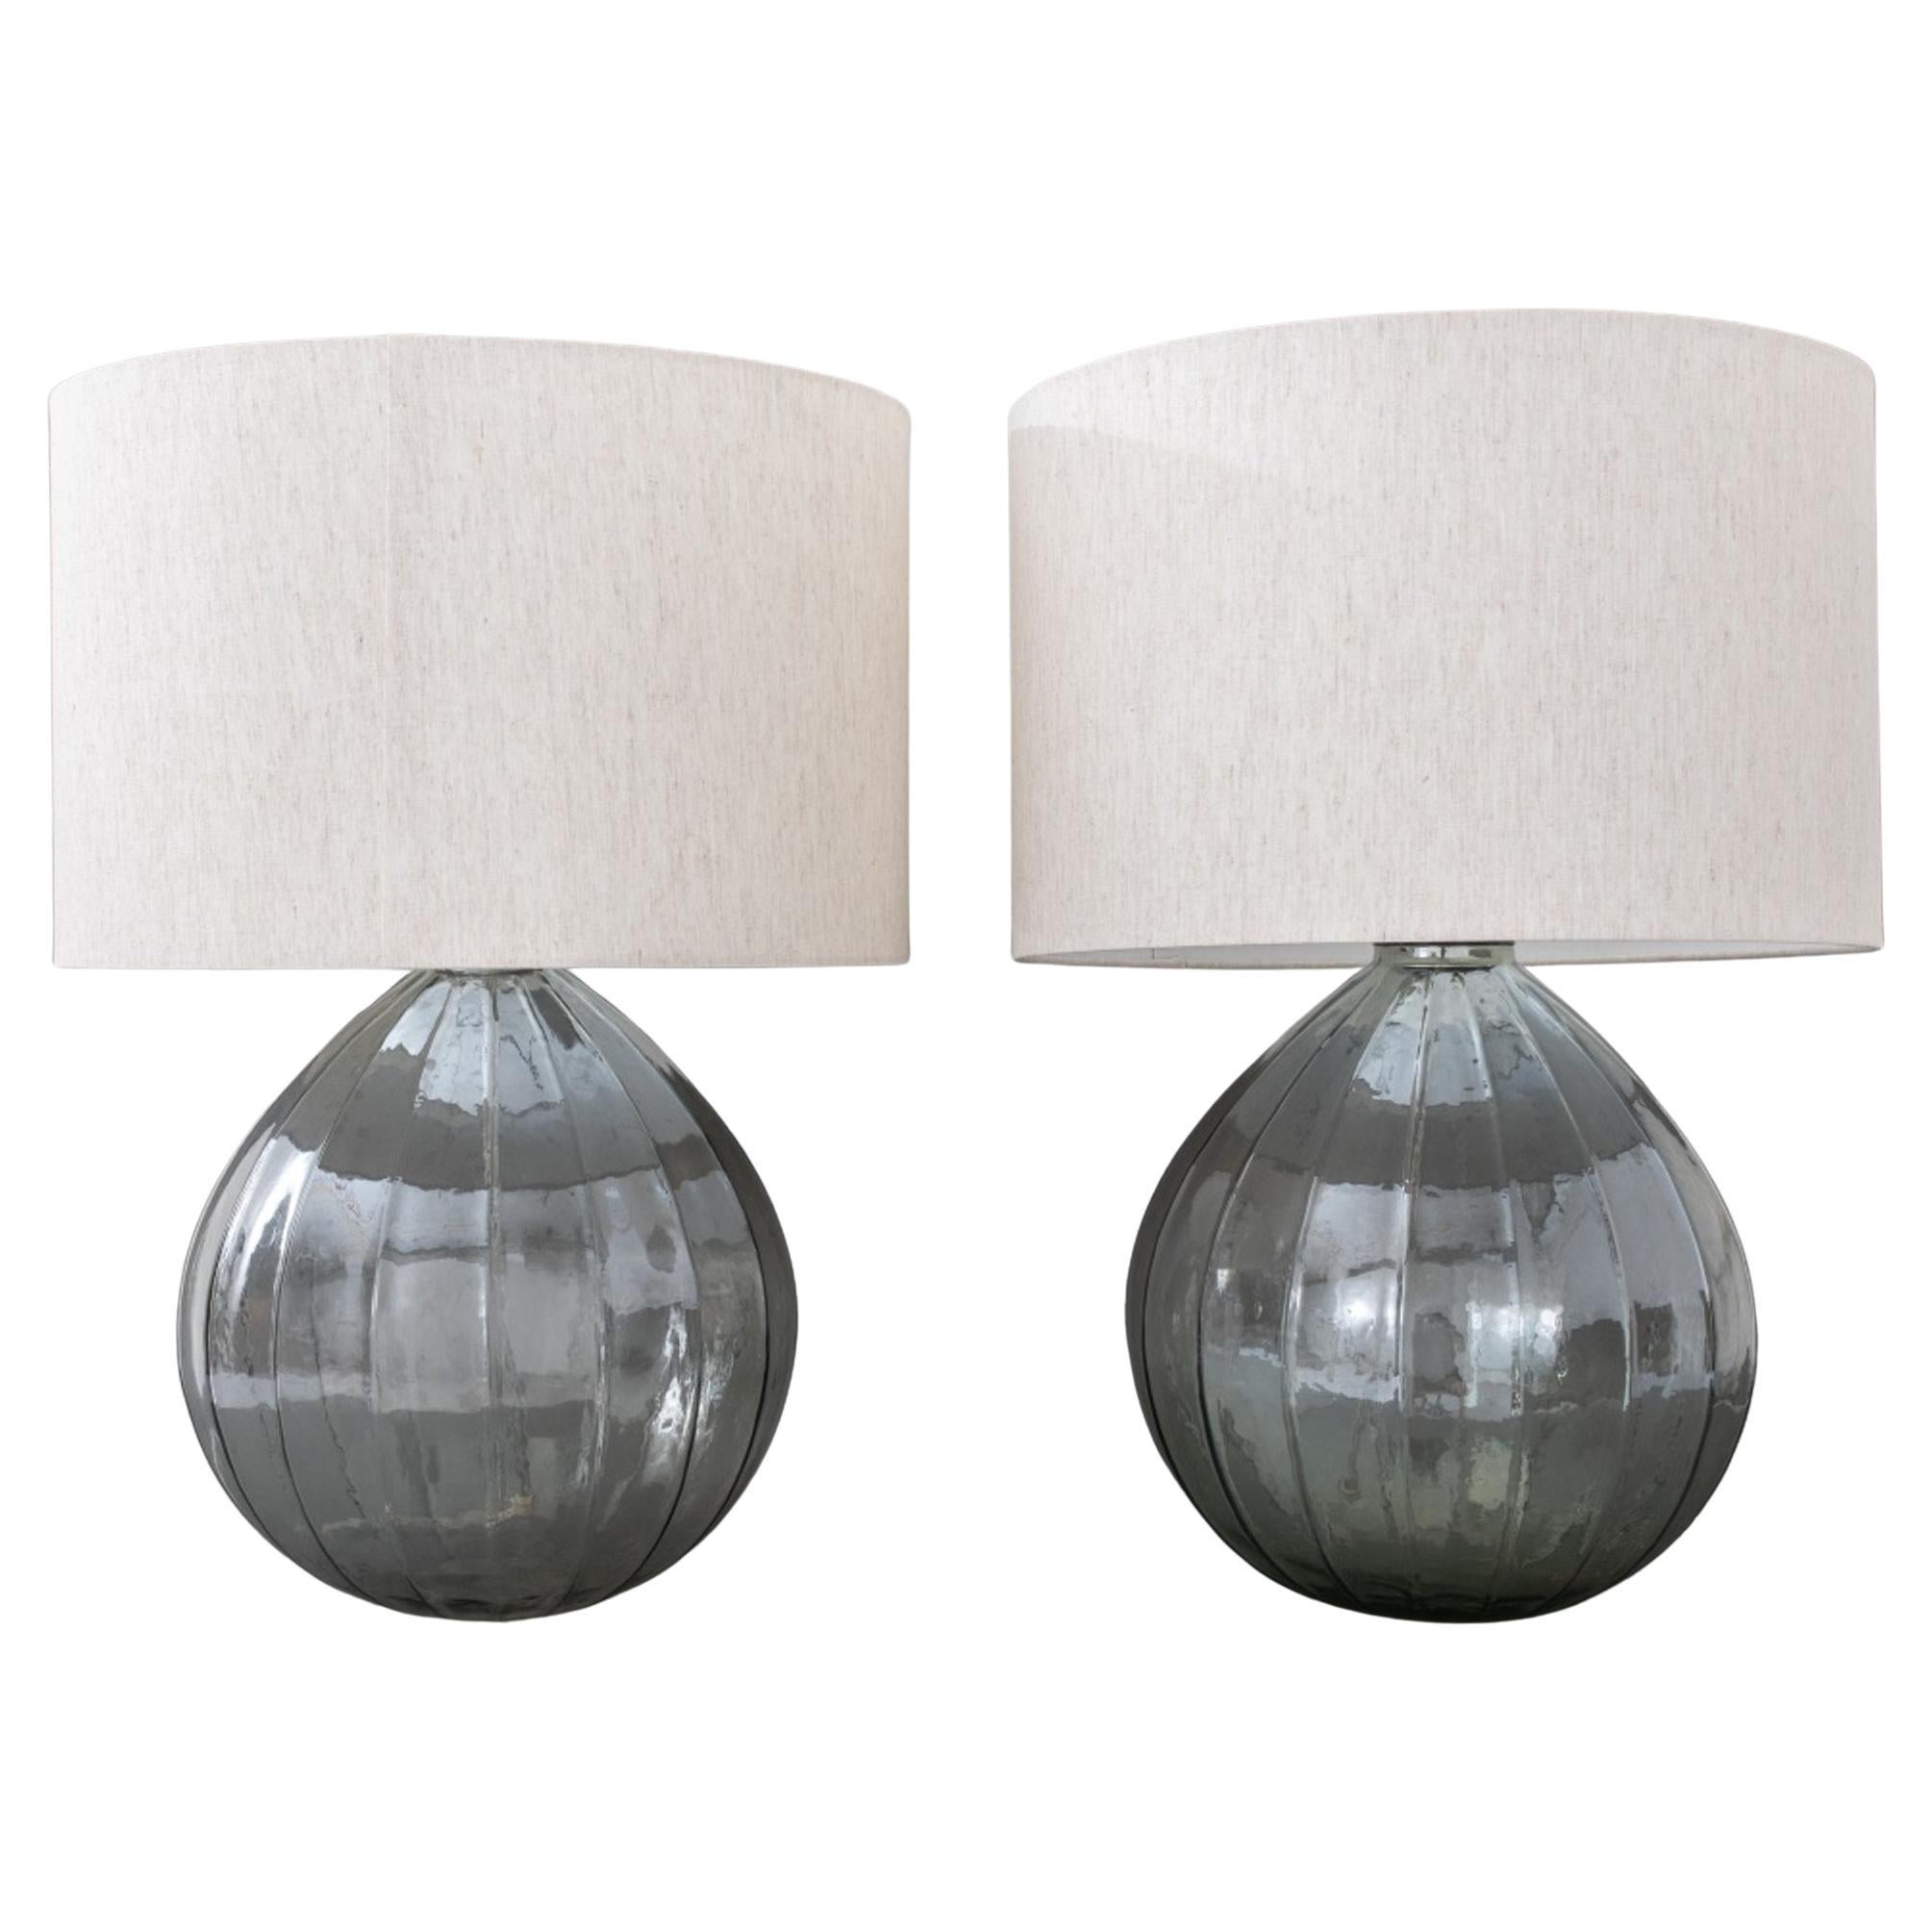 Pair of Modern Spherical Iridescent Glass Table Lamp